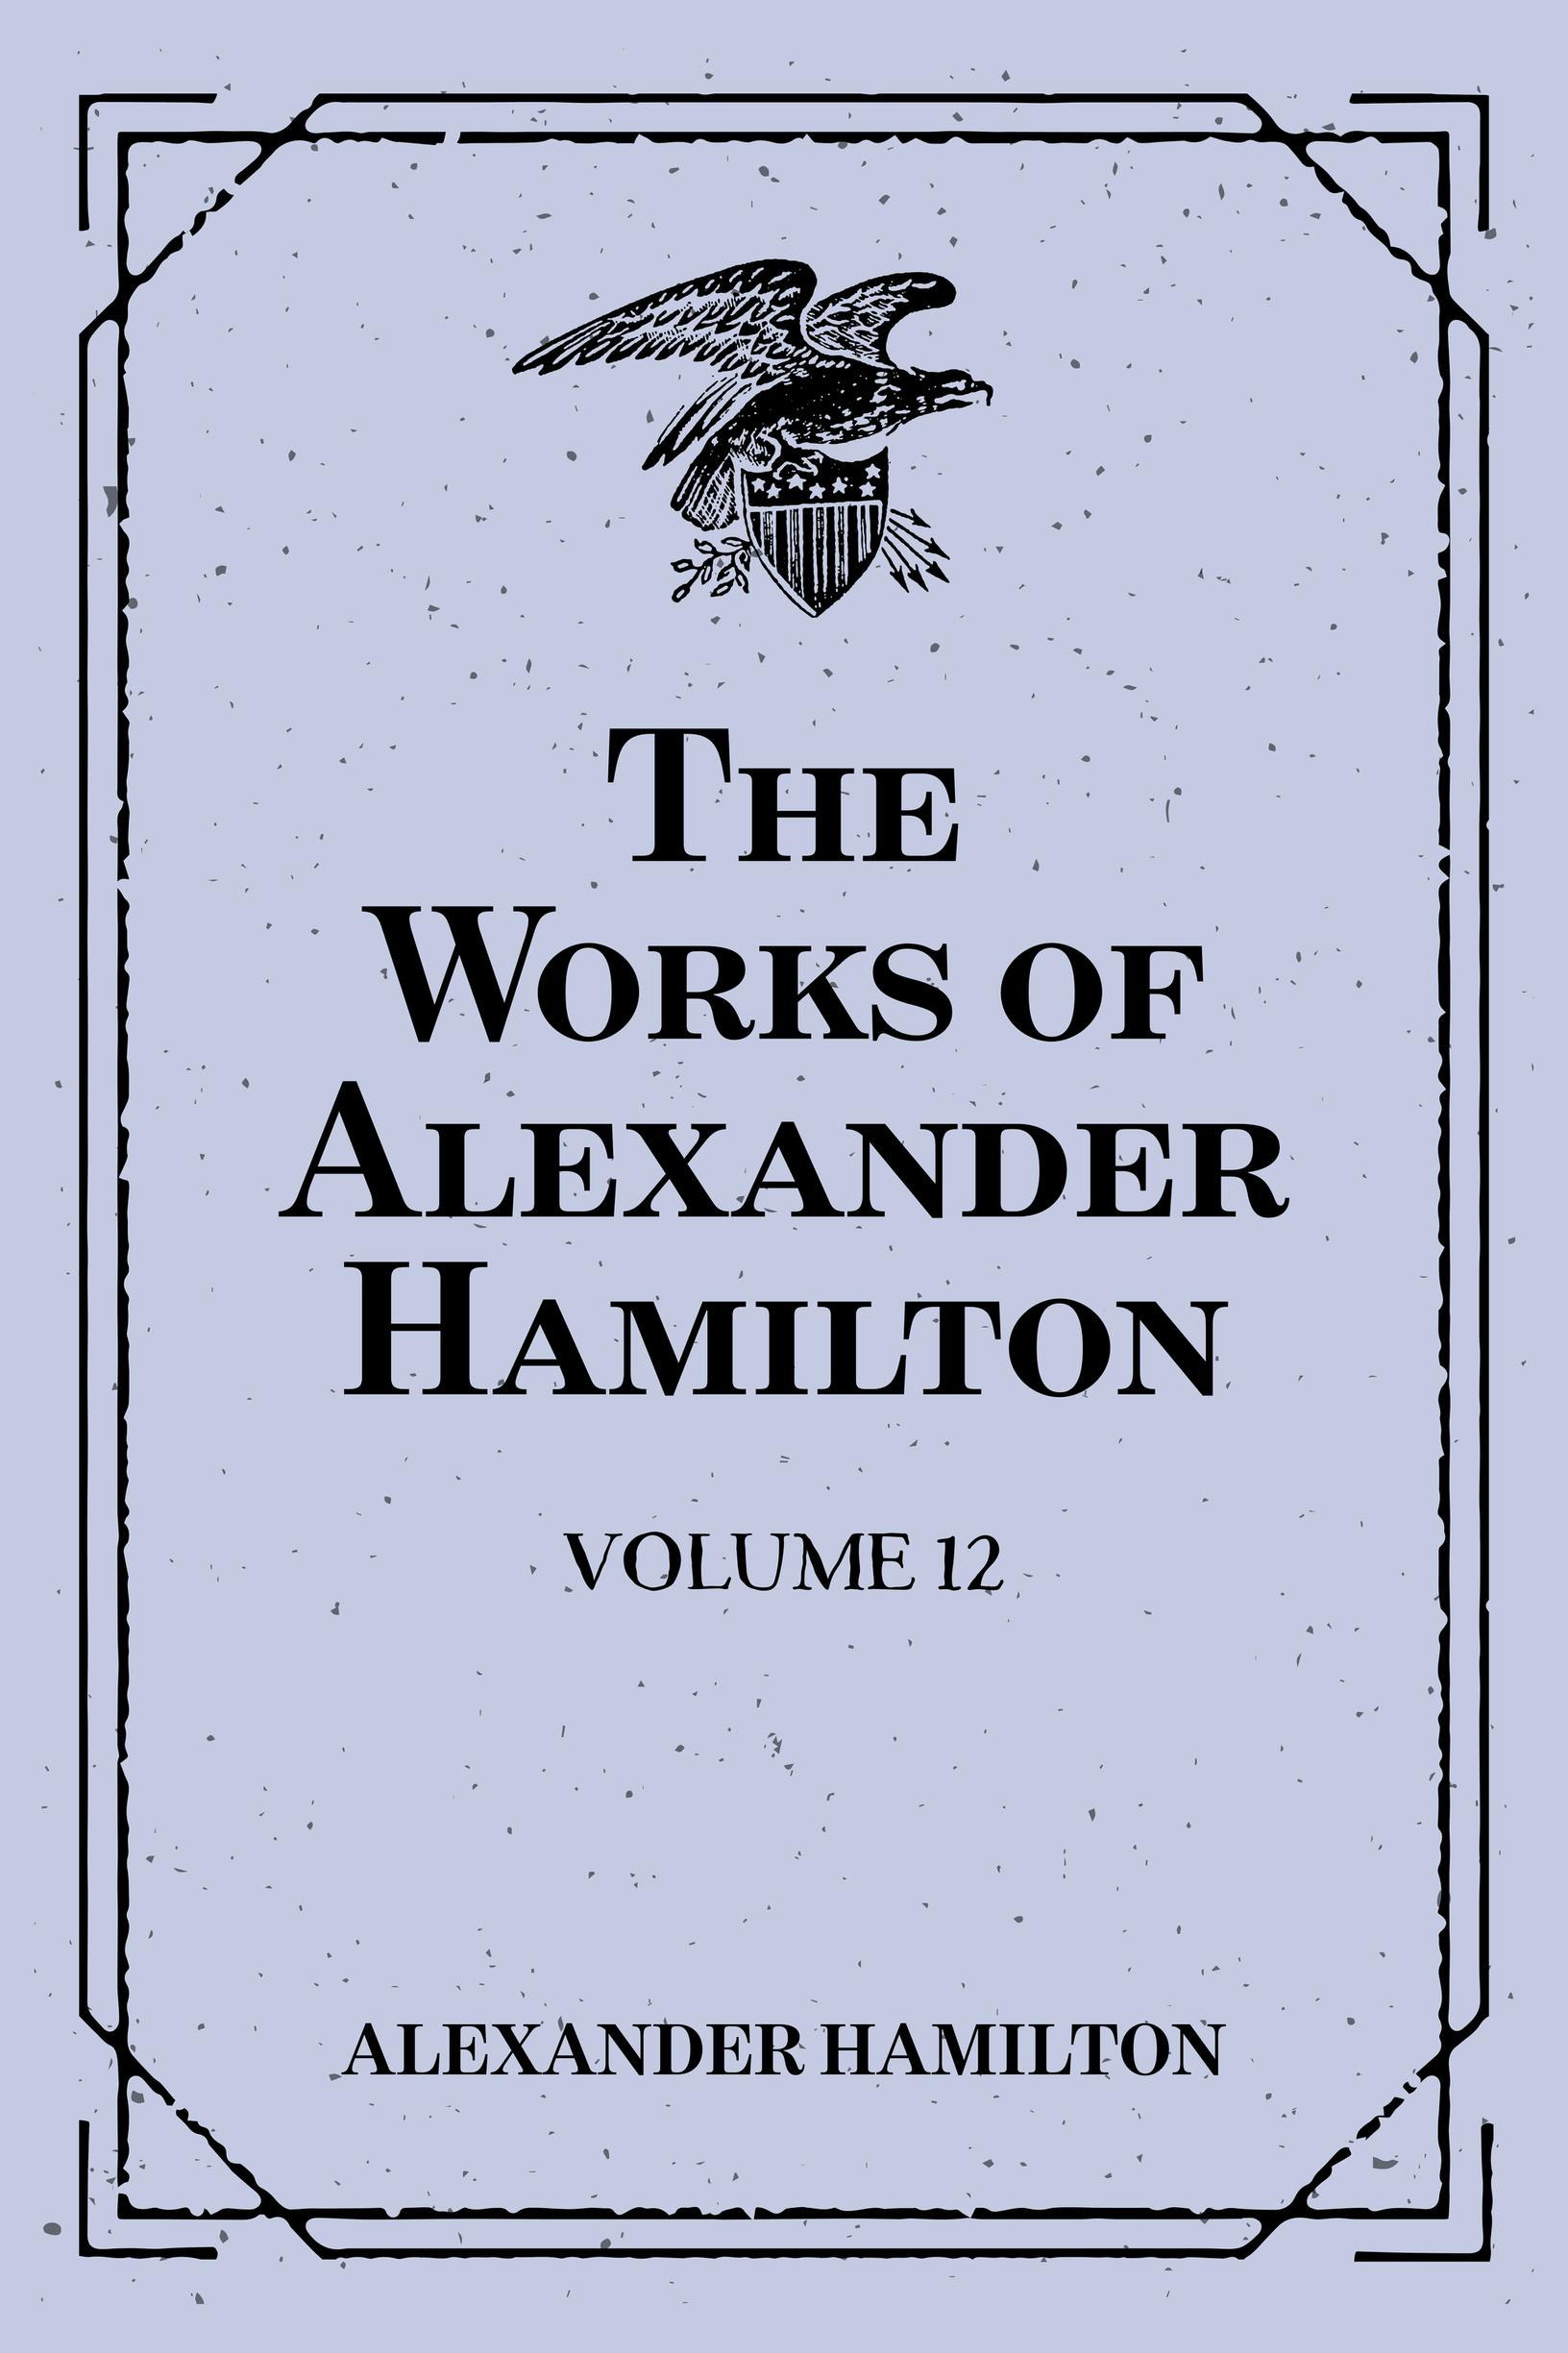 The Works of Alexander Hamilton: Volume 12 - Alexander Hamilton